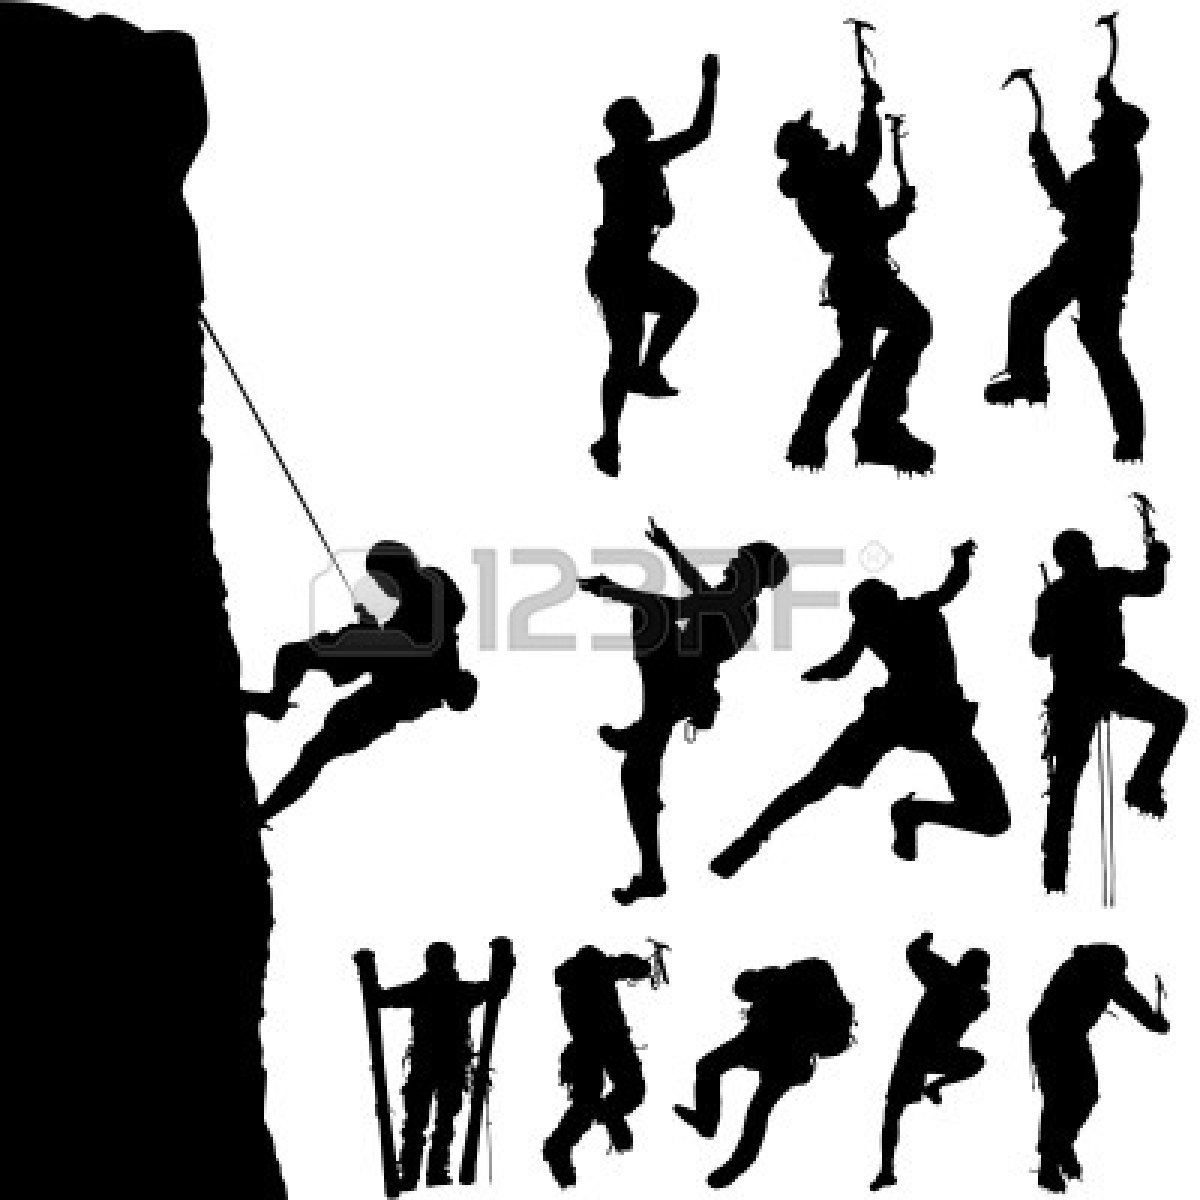 Rock climbers silhouette